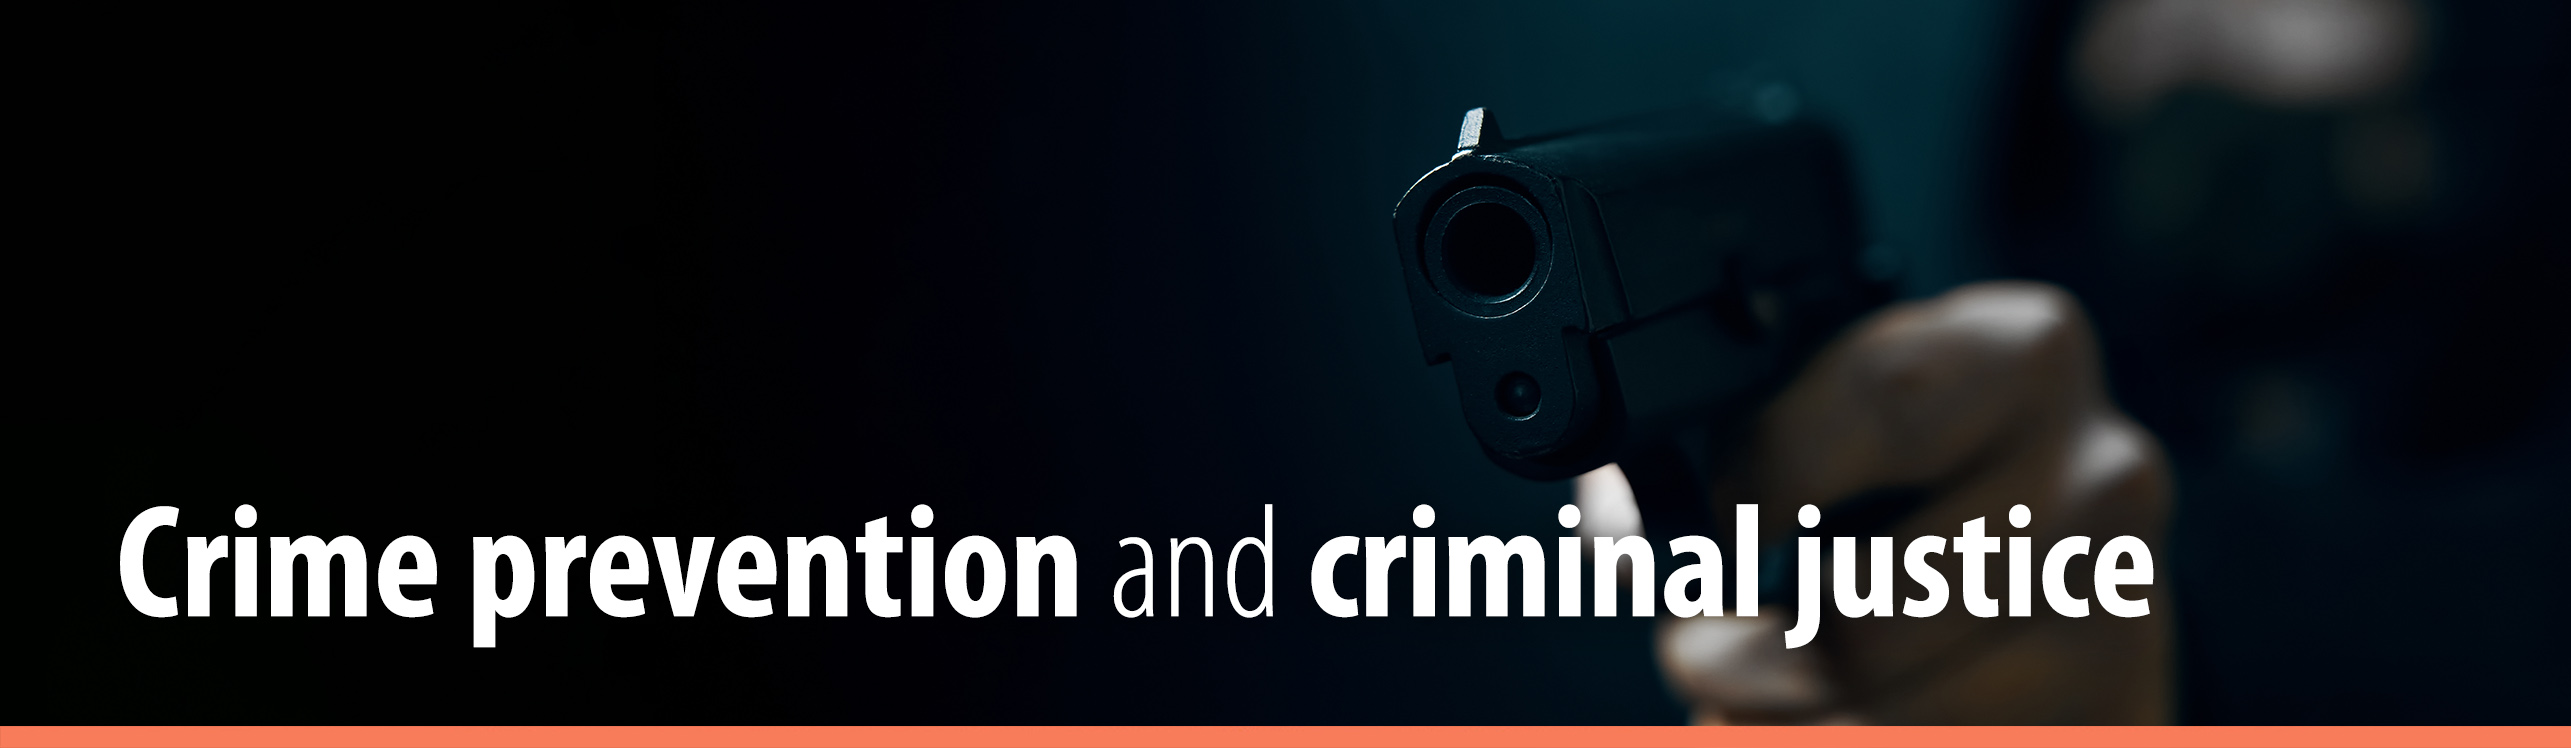 Crime prevention and criminal justice